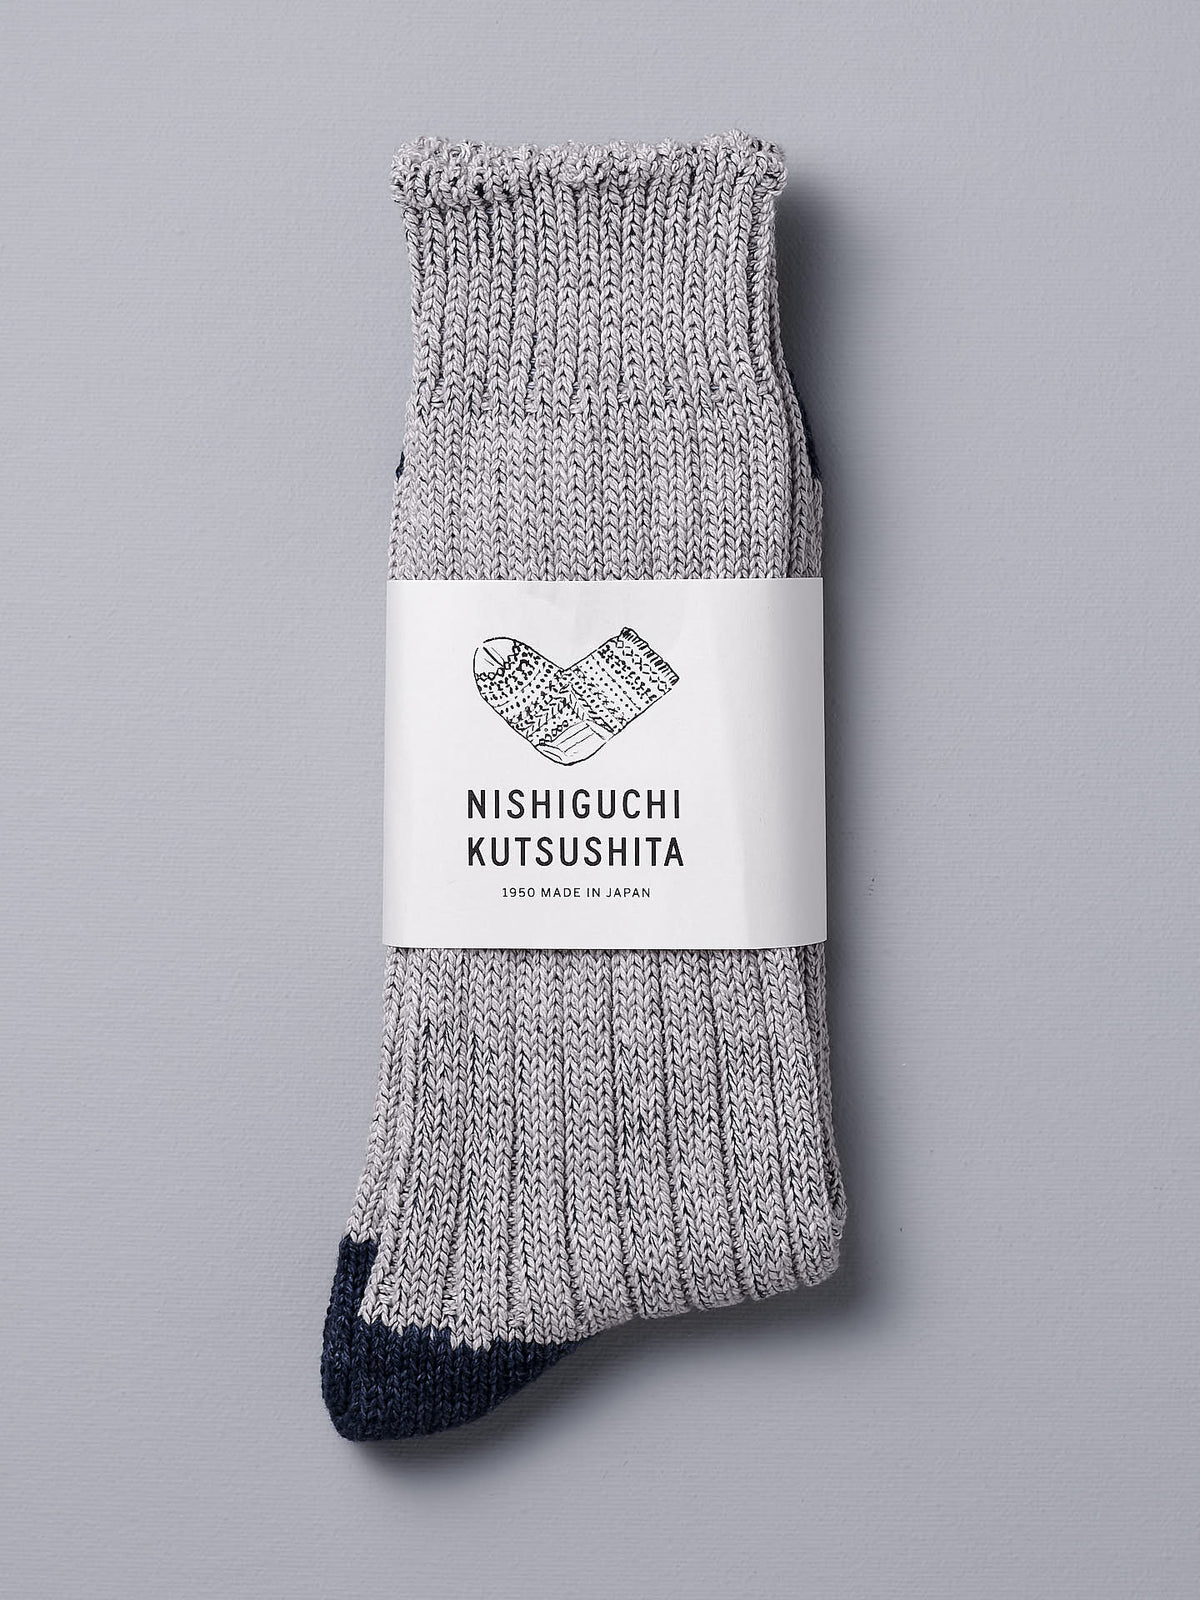 A pair of Boston Slab Socks – Grey Denim with a Nishiguchi Kutsushita label on them.